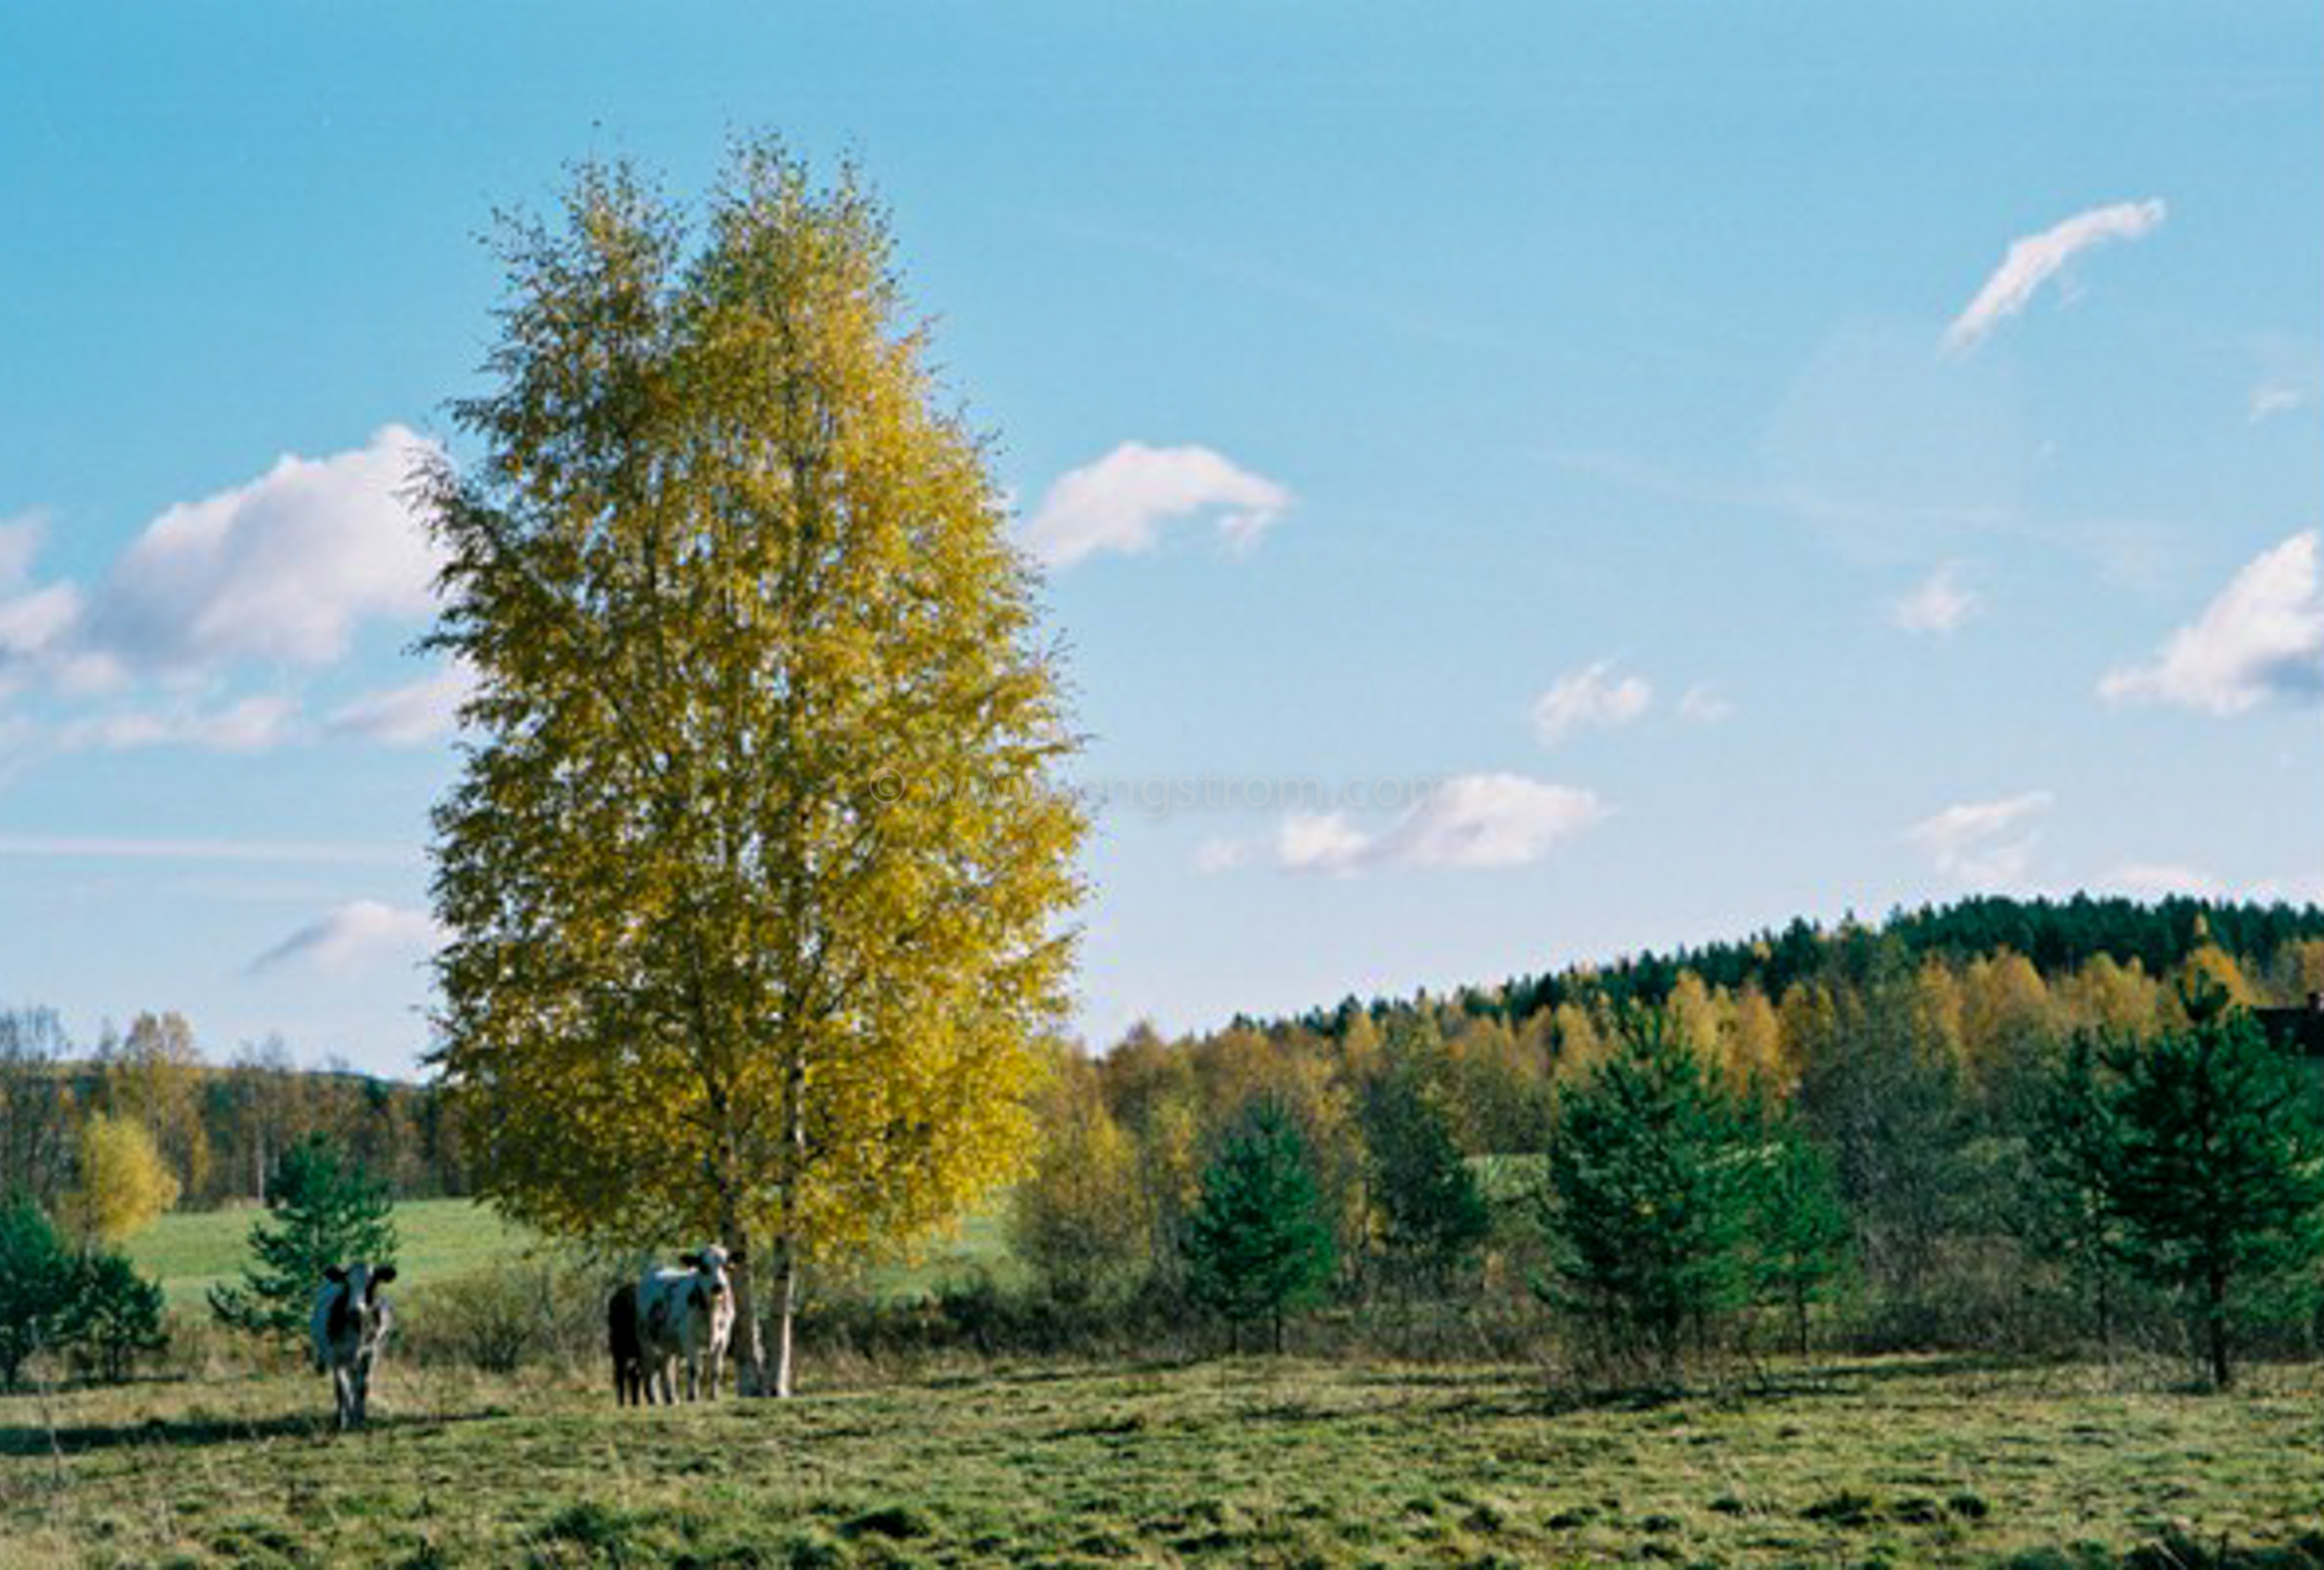 JE0424_076, Ungdjur under björk i höstfärger, Jonas Engström